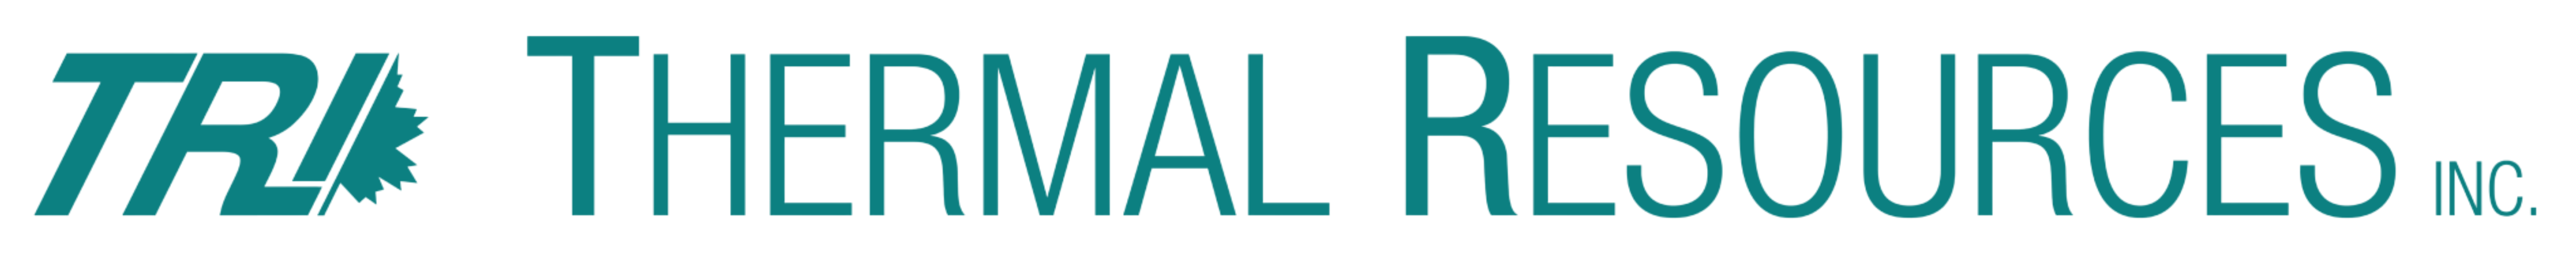 Thermal Resources Inc. Logo